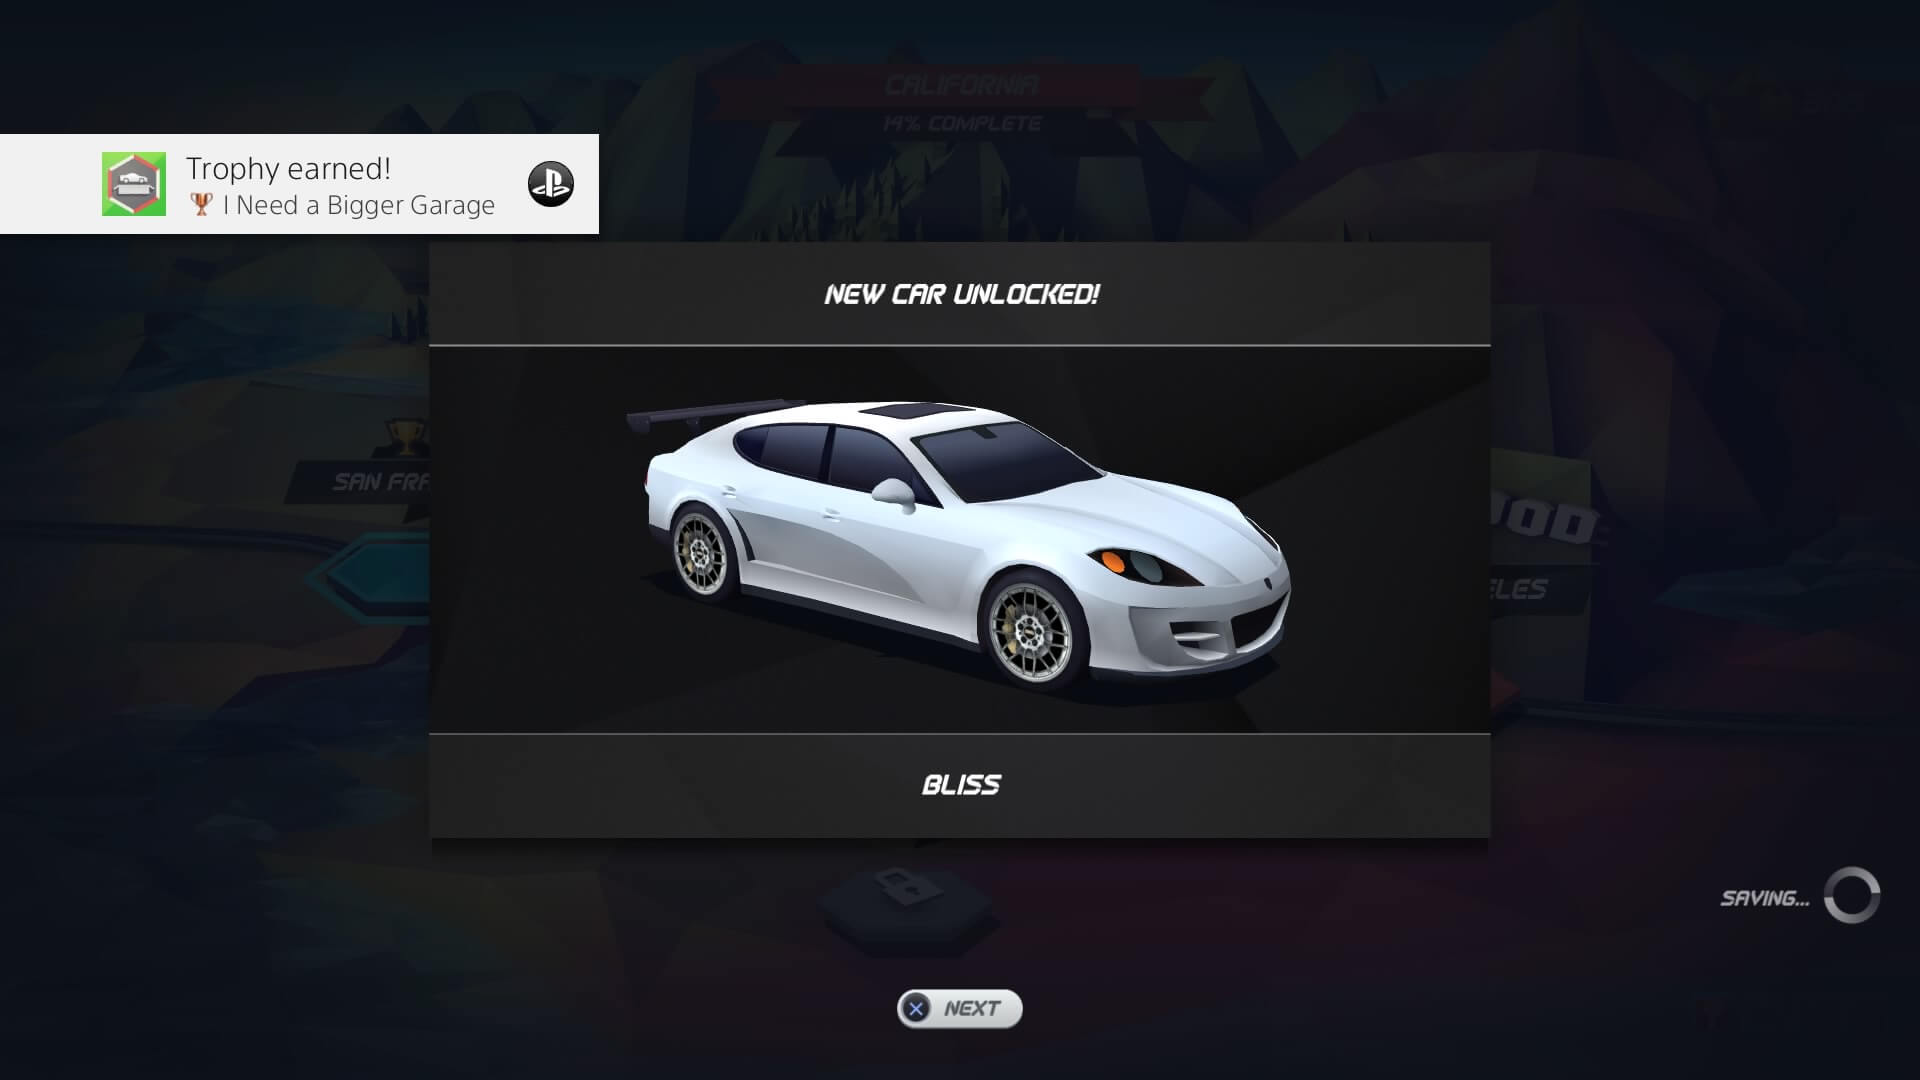 Screenshot of Horizon Chase Turbo game showing new car being unlocked